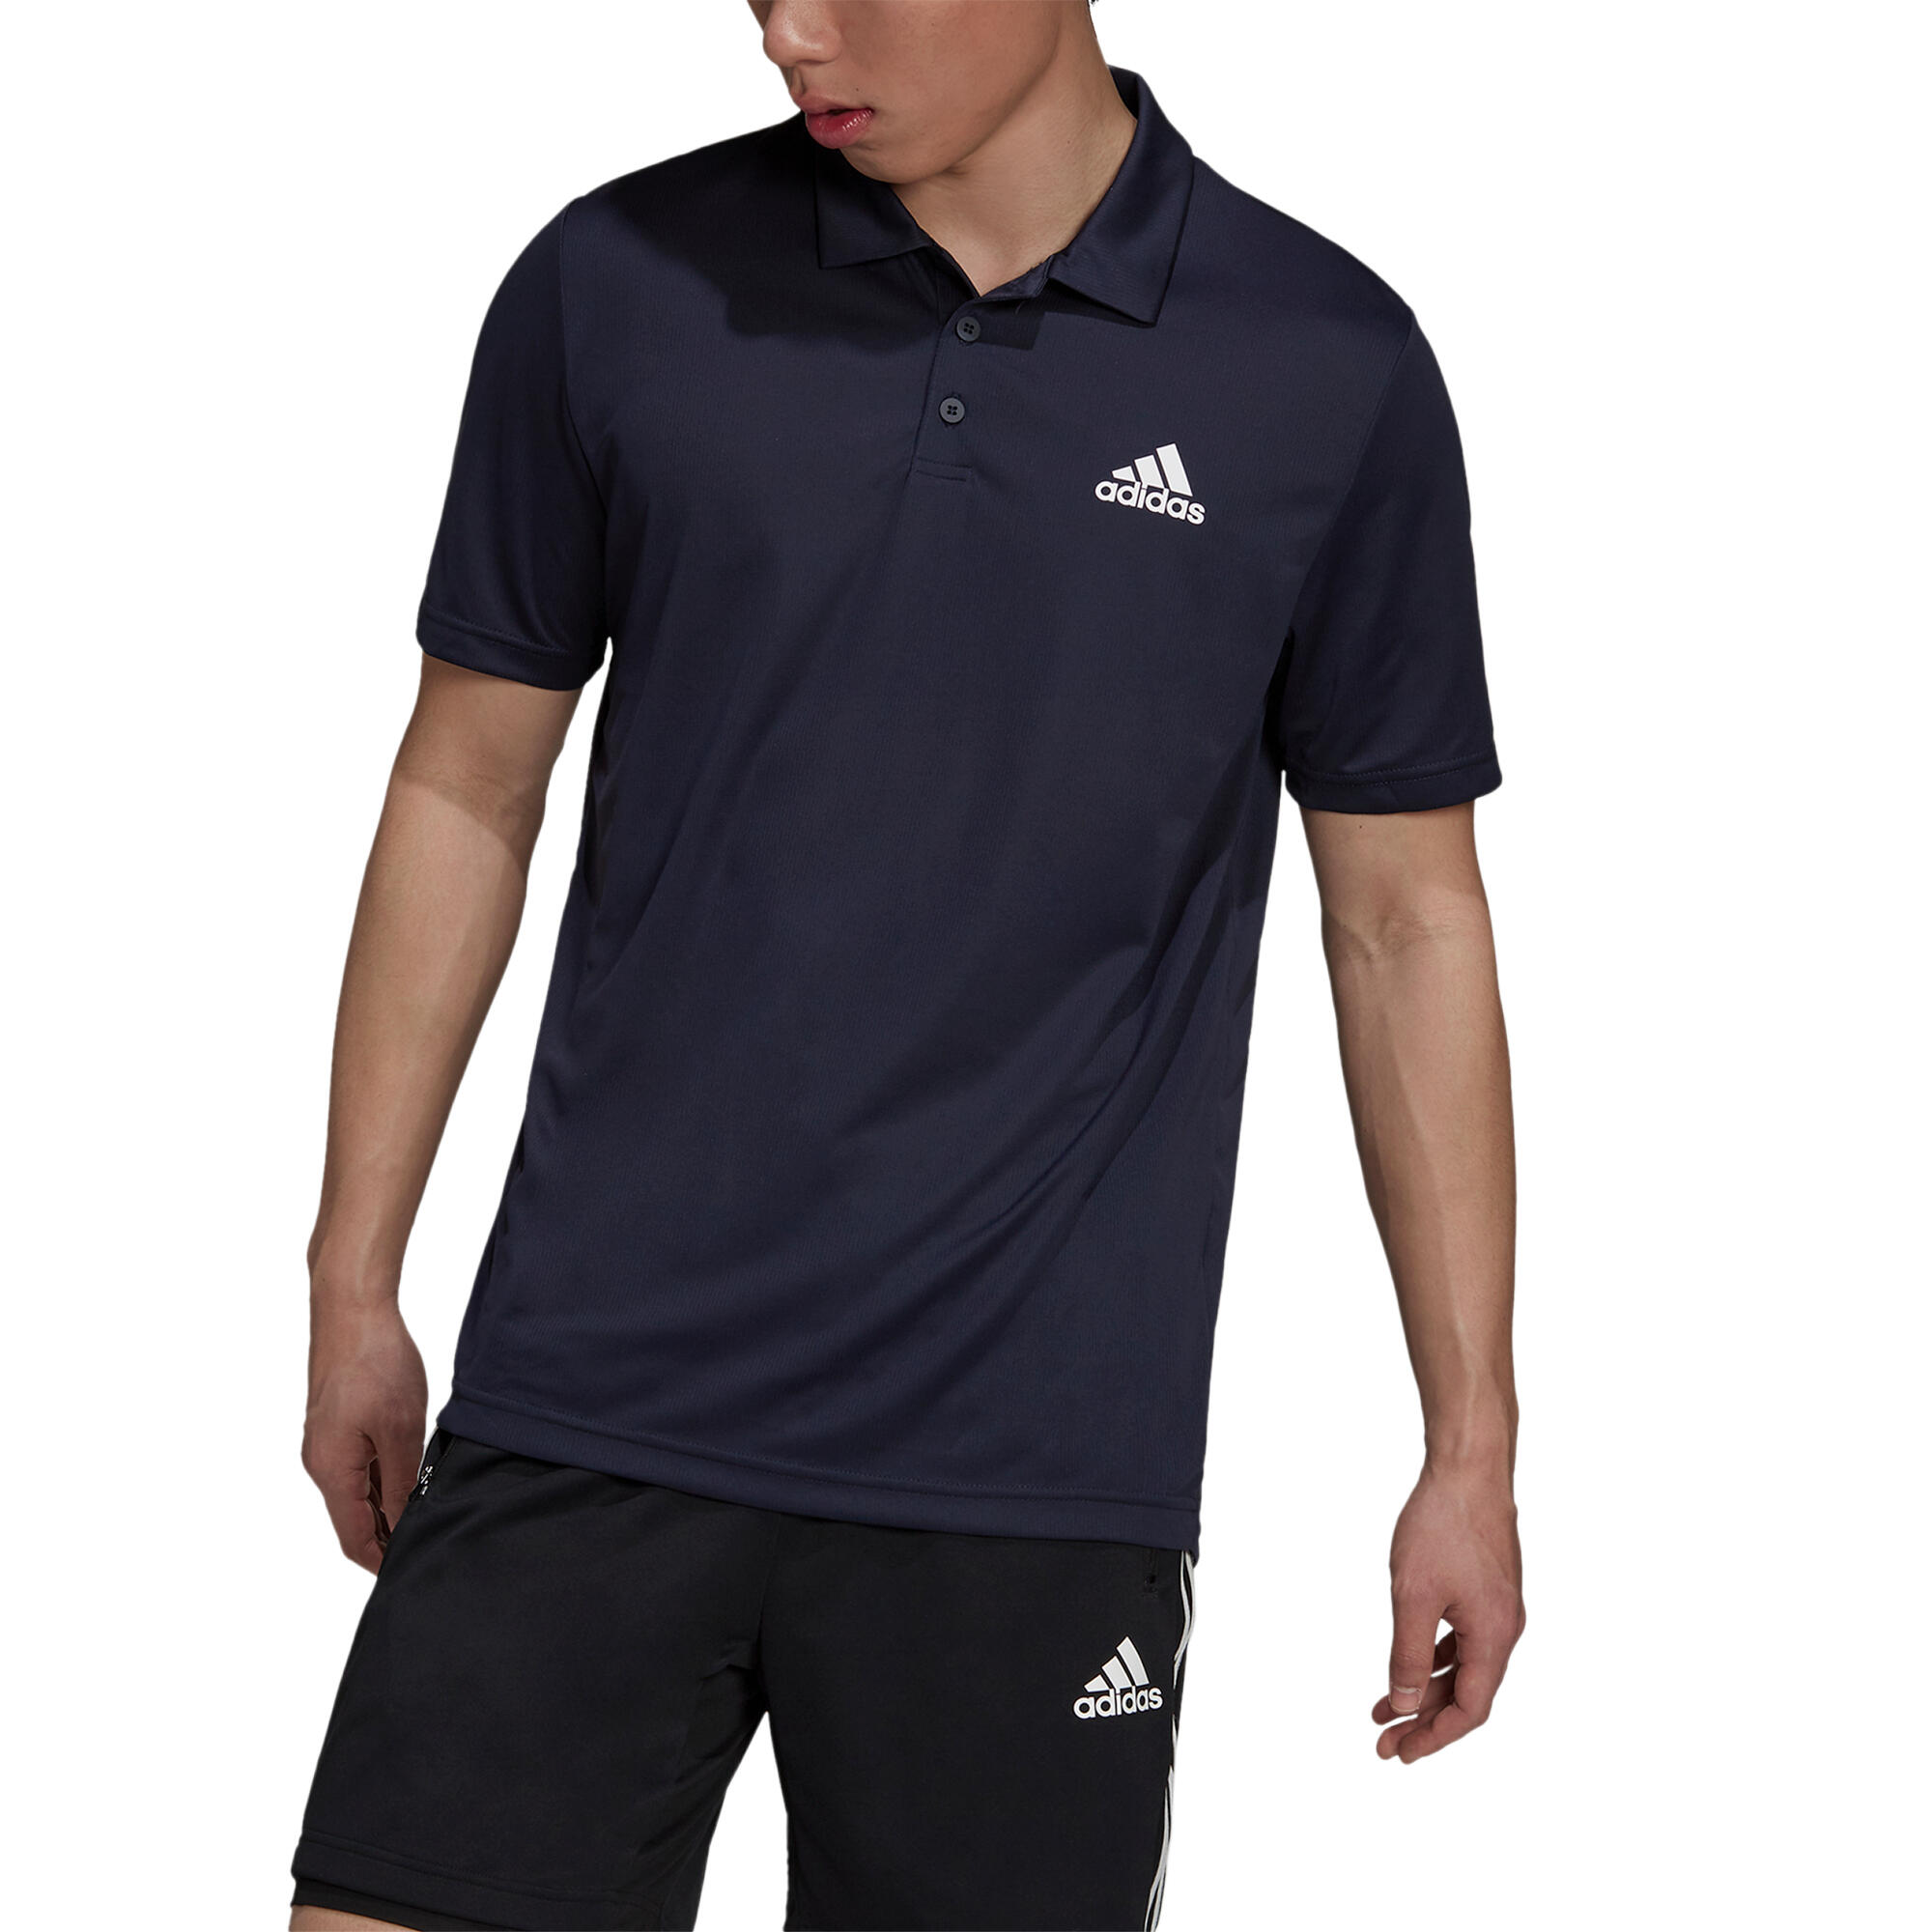 Men's Short-Sleeved Tennis Polo Shirt - Navy Blue 2/8